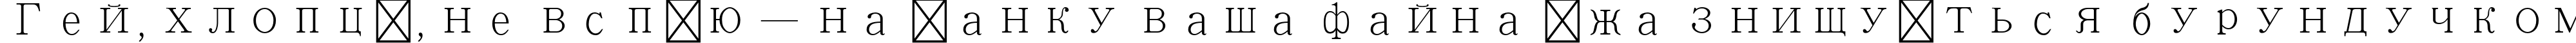 Пример написания шрифтом Adobe Ming Std L текста на украинском